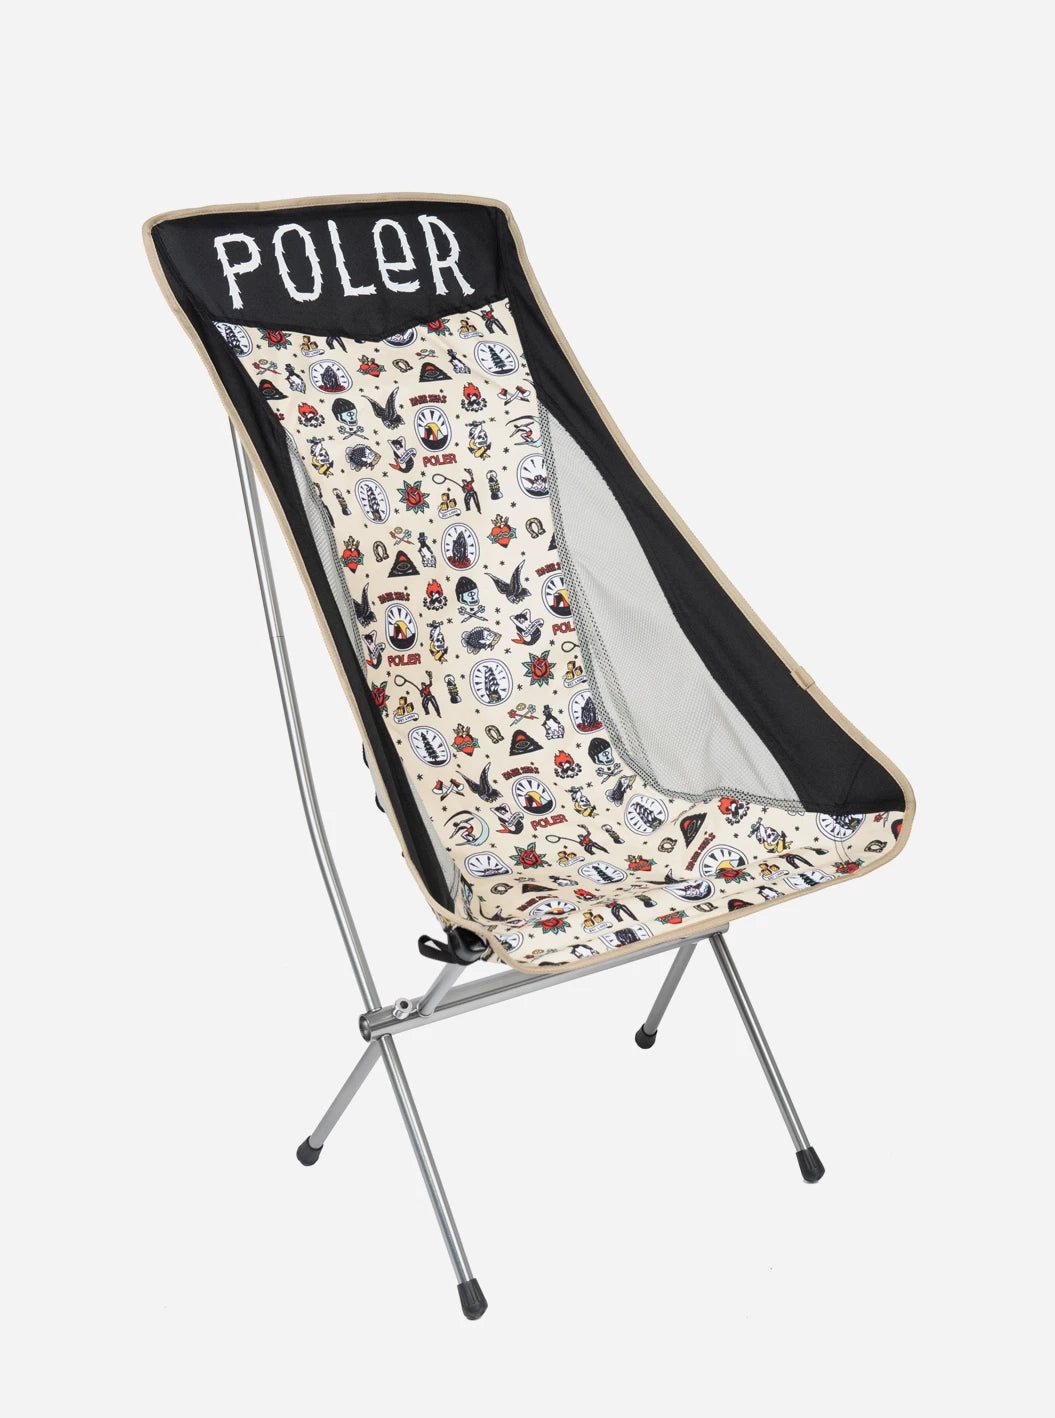 Dark Seas Poler Stowaway Chair